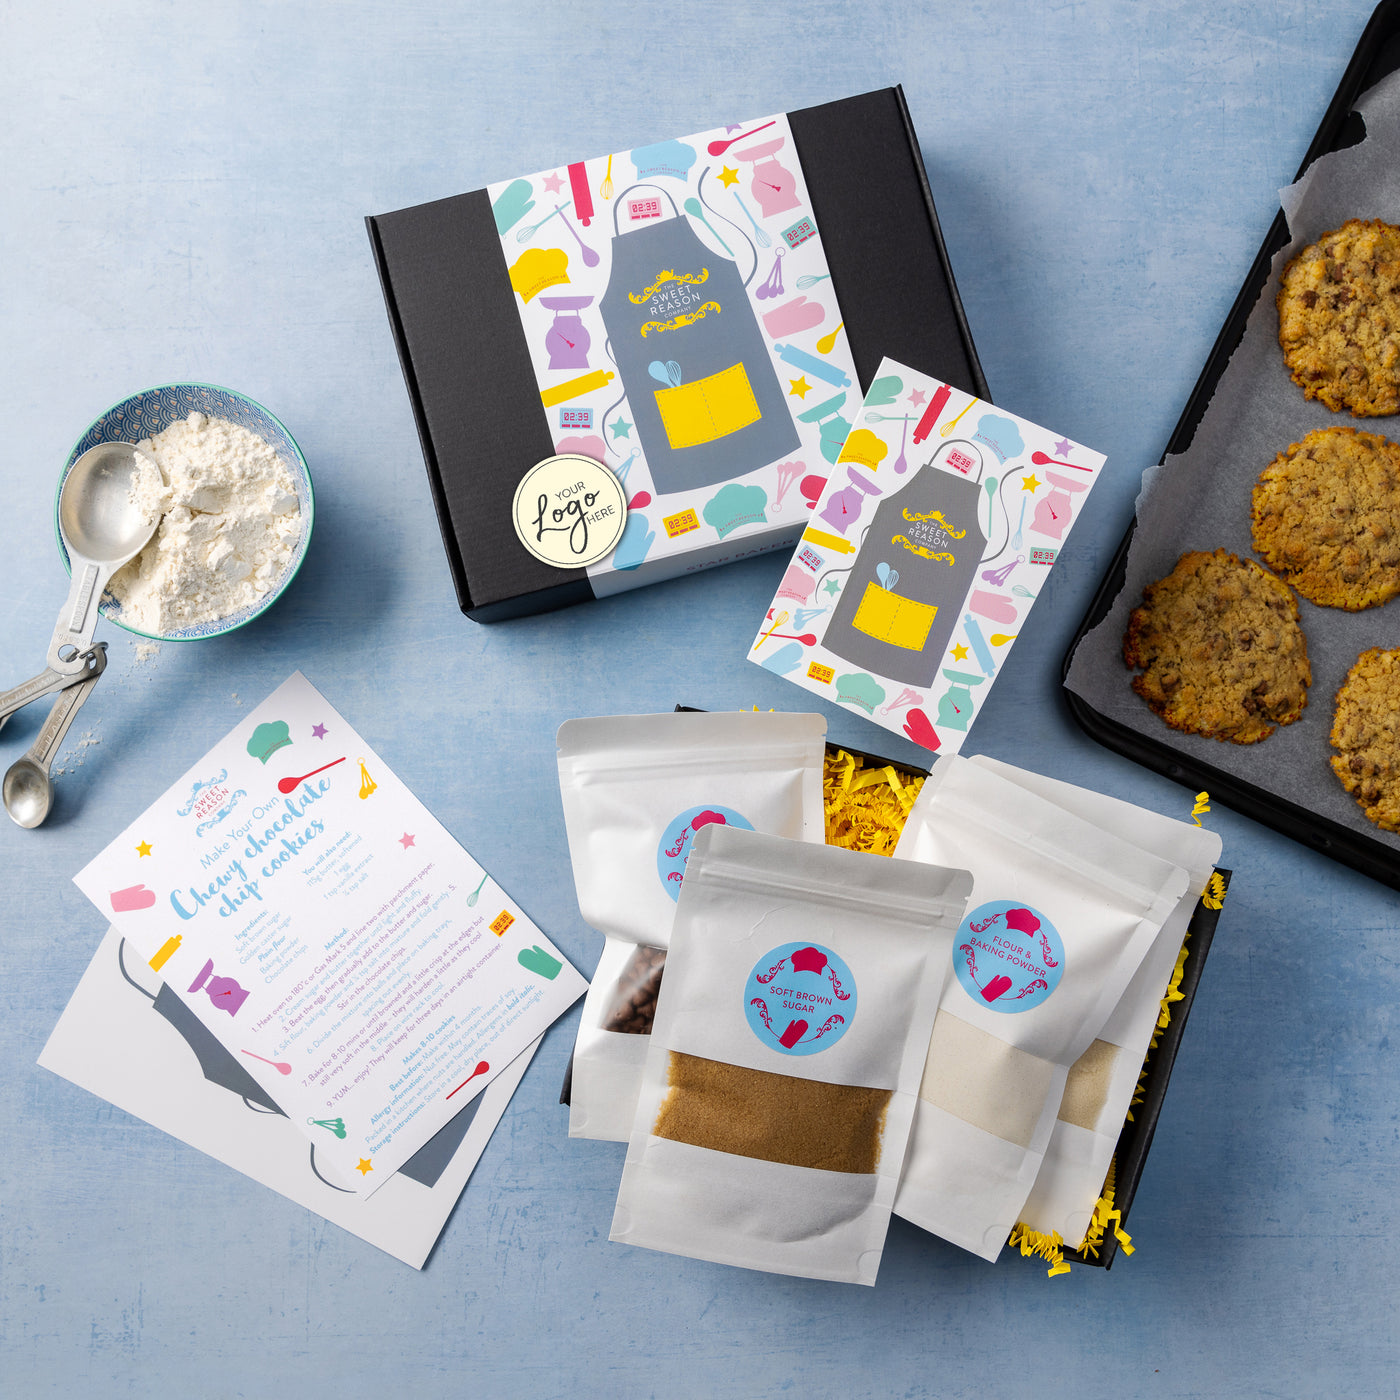 Branded & personalised Bake Your Own Cookies